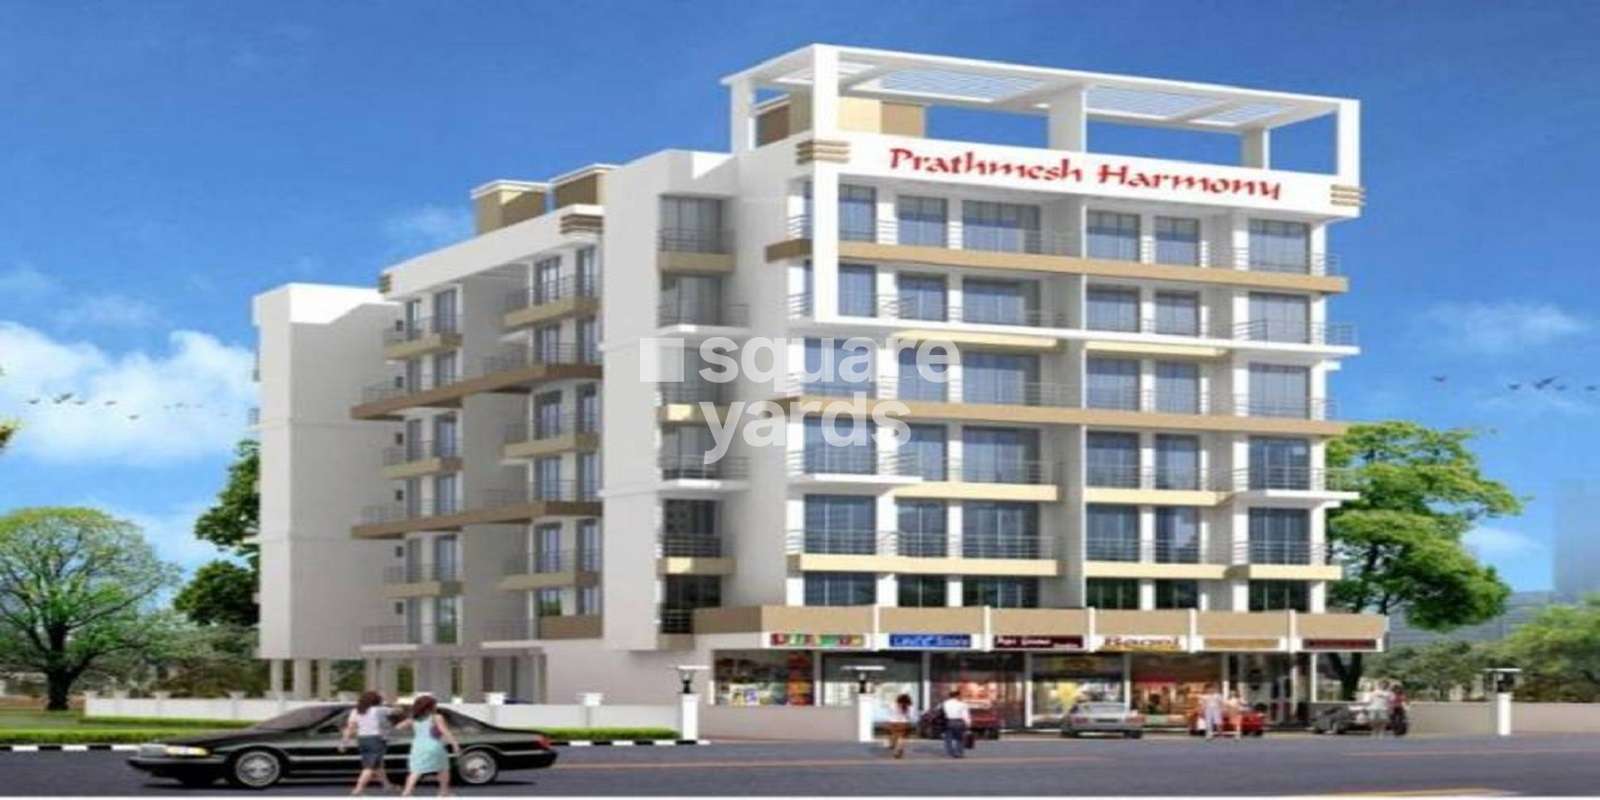 Prathmesh Harmony Apartment Cover Image